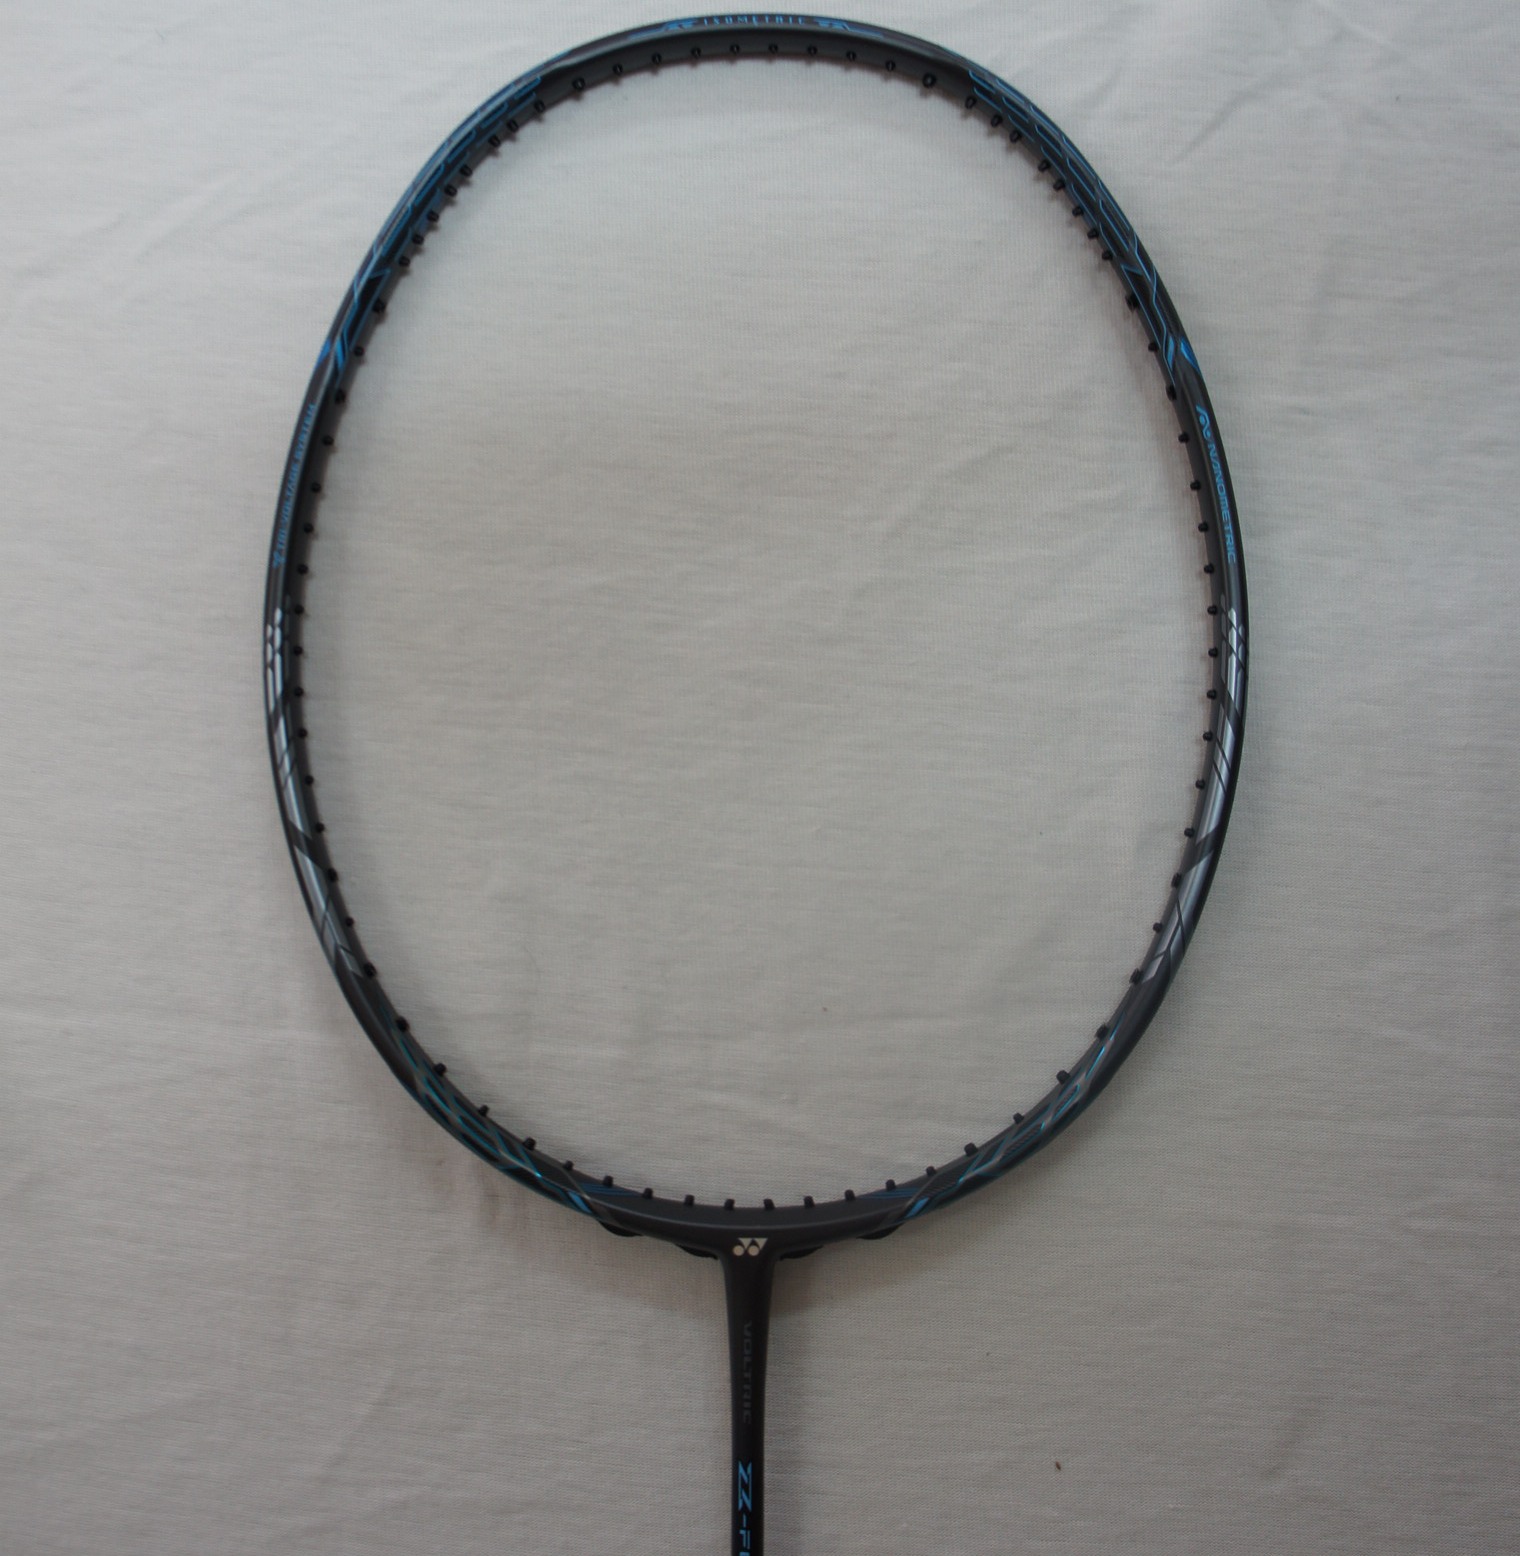 4UG5 Choice of String Voltric Z-Force II Badminton Racquet VTZF2 YONEX VTZF 2 